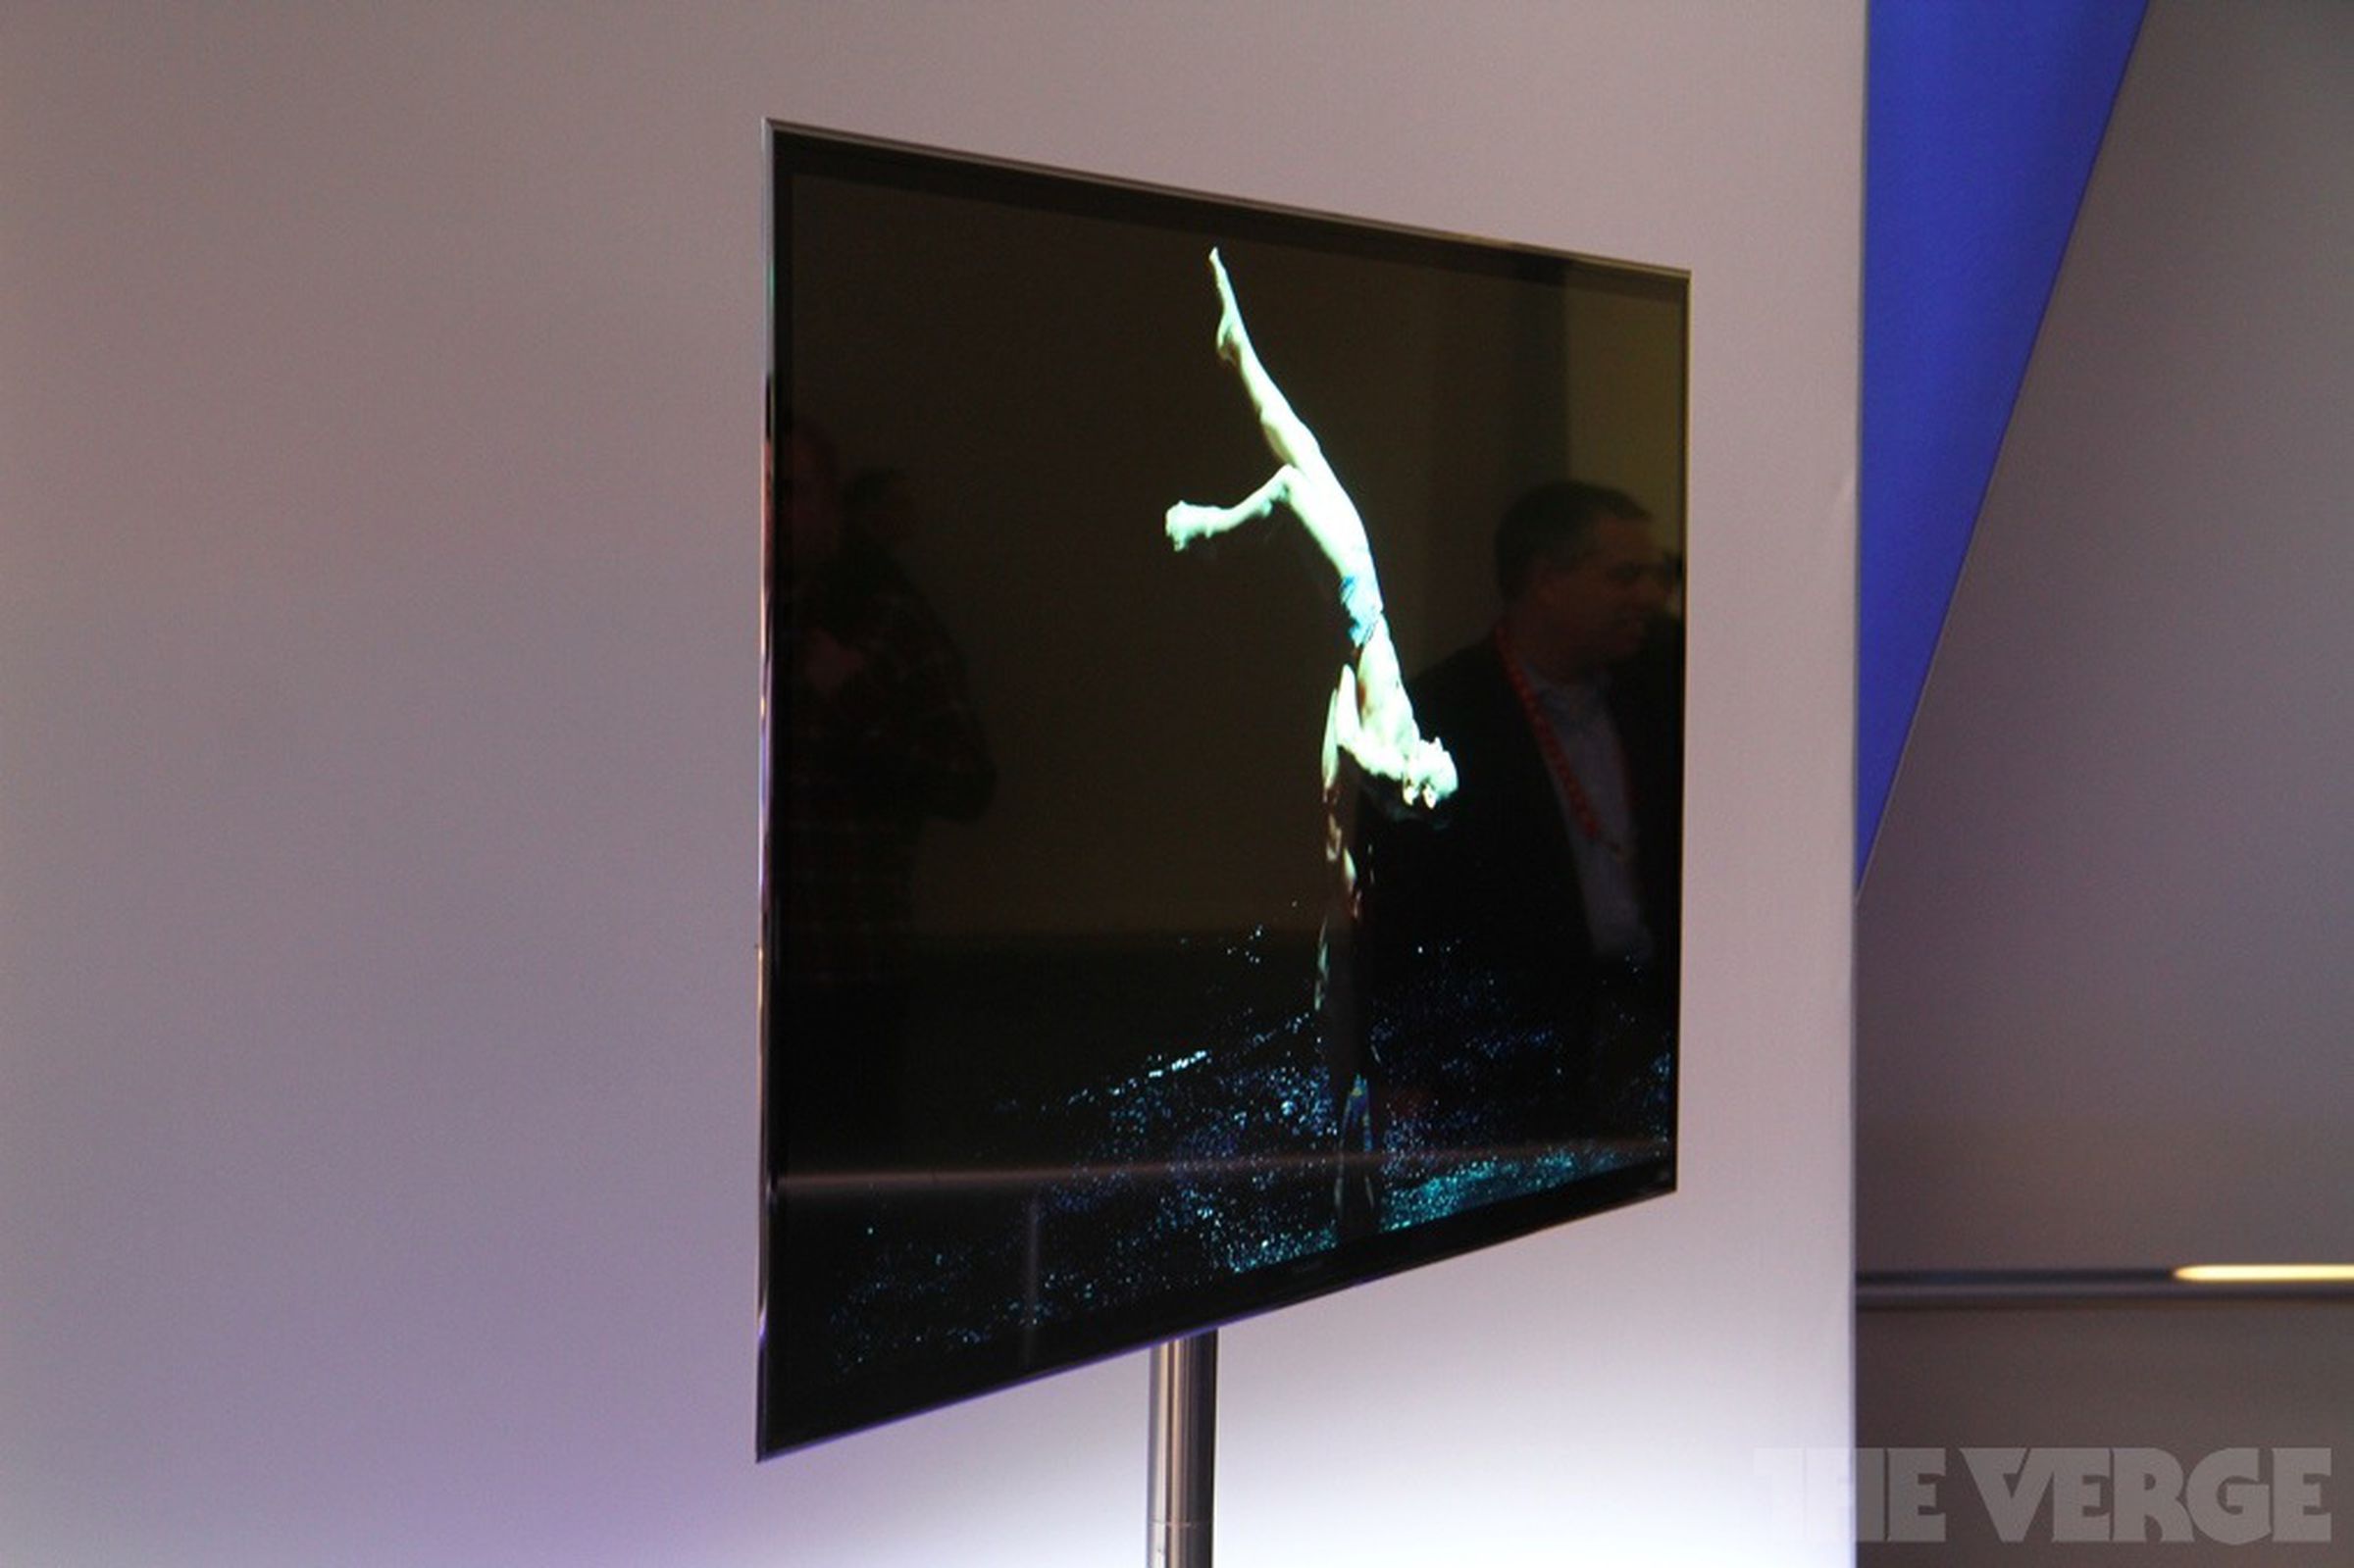 Panasonic 4K OLED TV hands-on photos